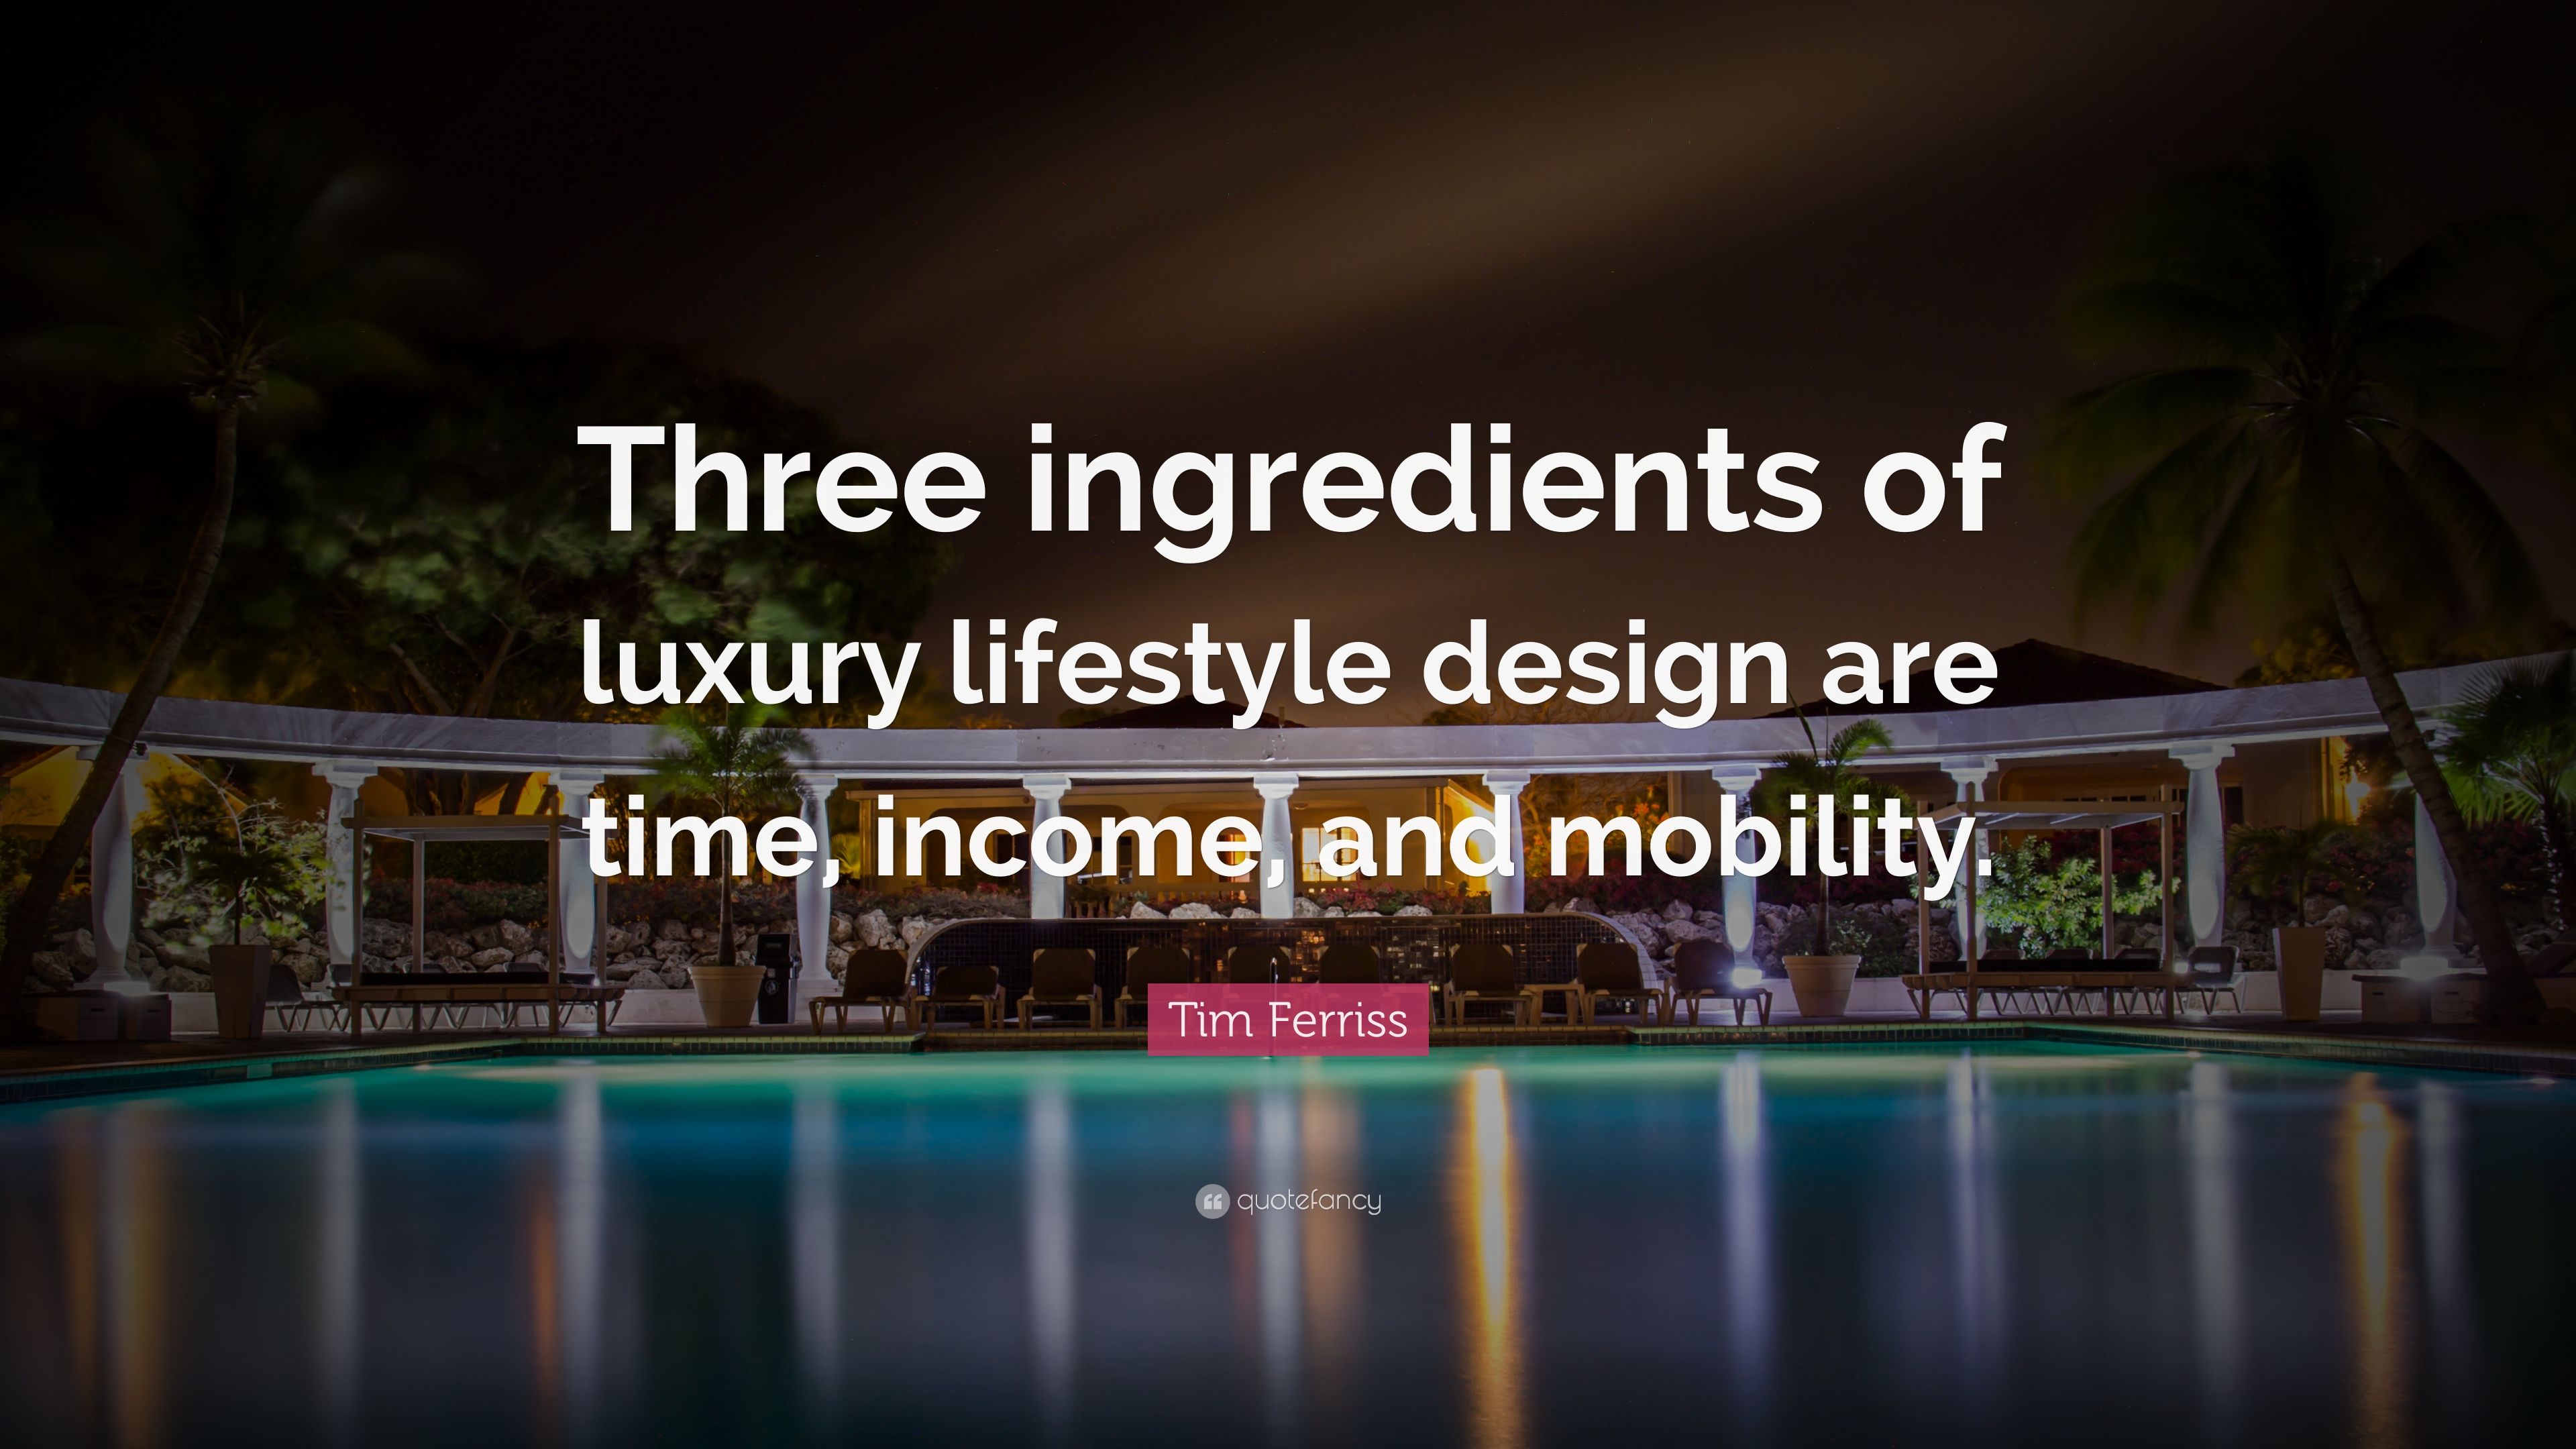 Tim Ferriss Quote: “Three ingredients of luxury lifestyle design